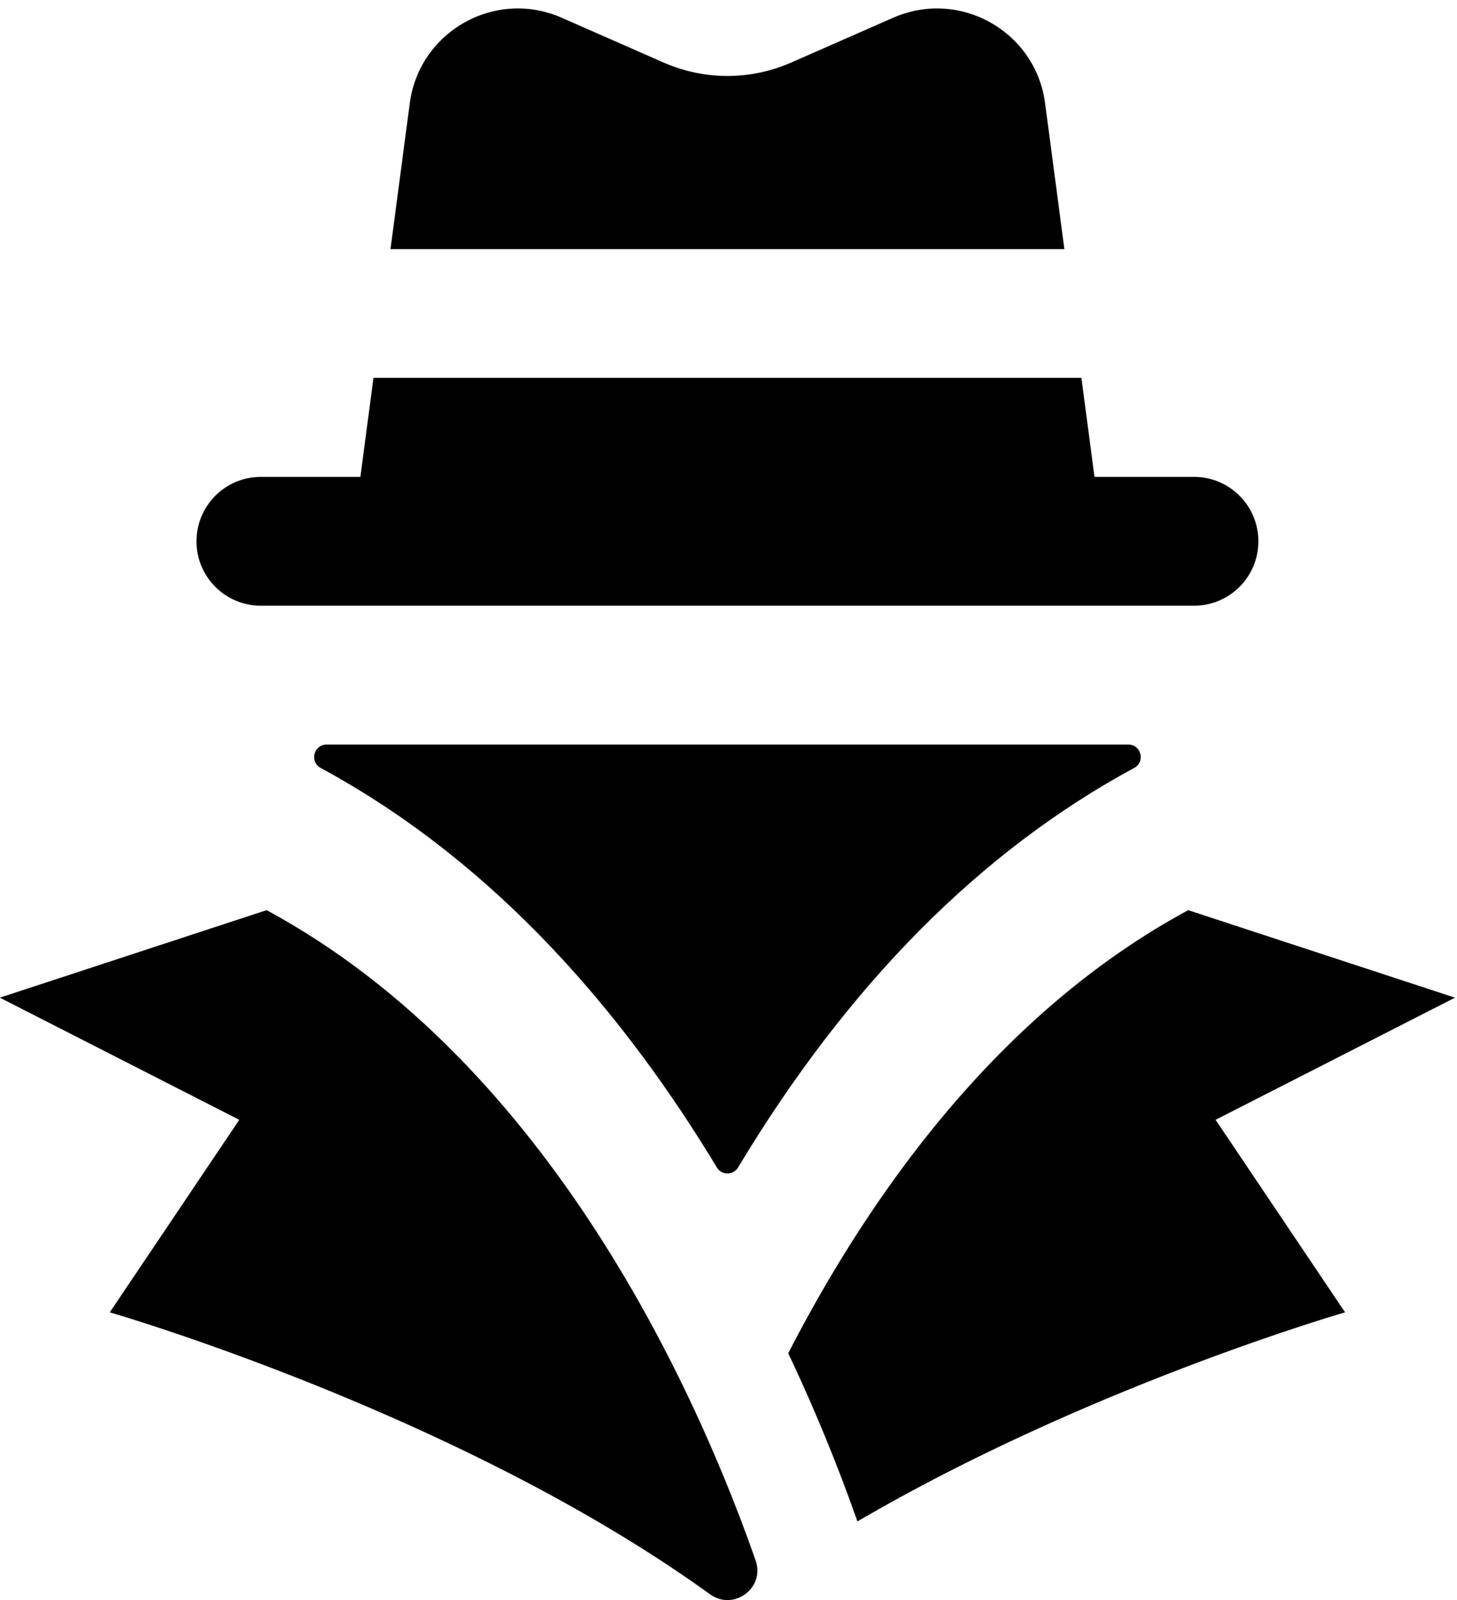 Spy icon (Simple vector illustration)